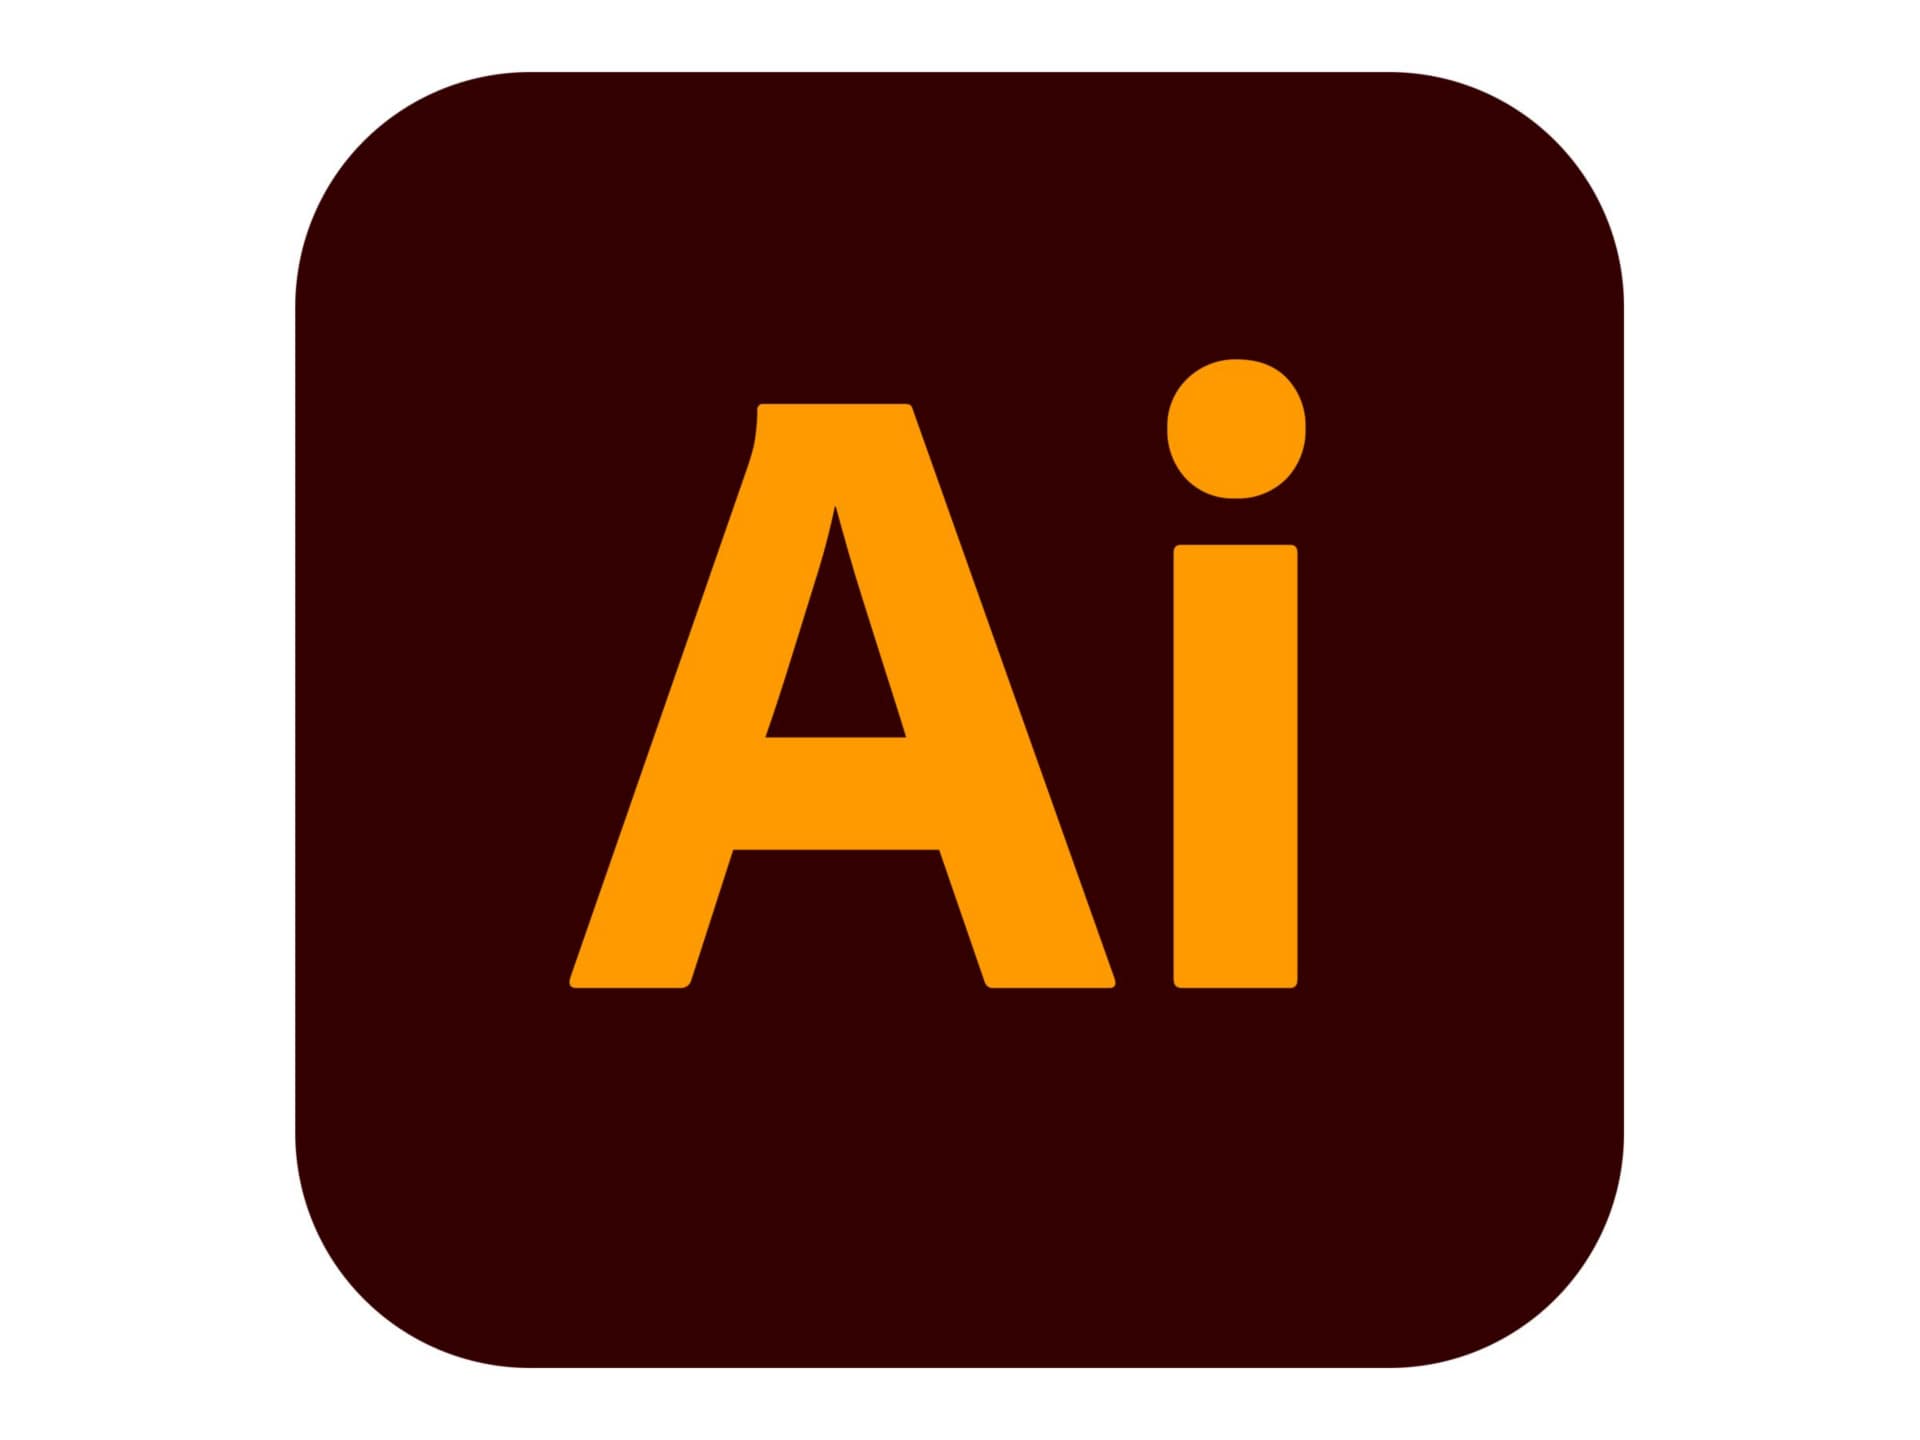 Adobe Illustrator CC for teams - Subscription Renewal - 1 user